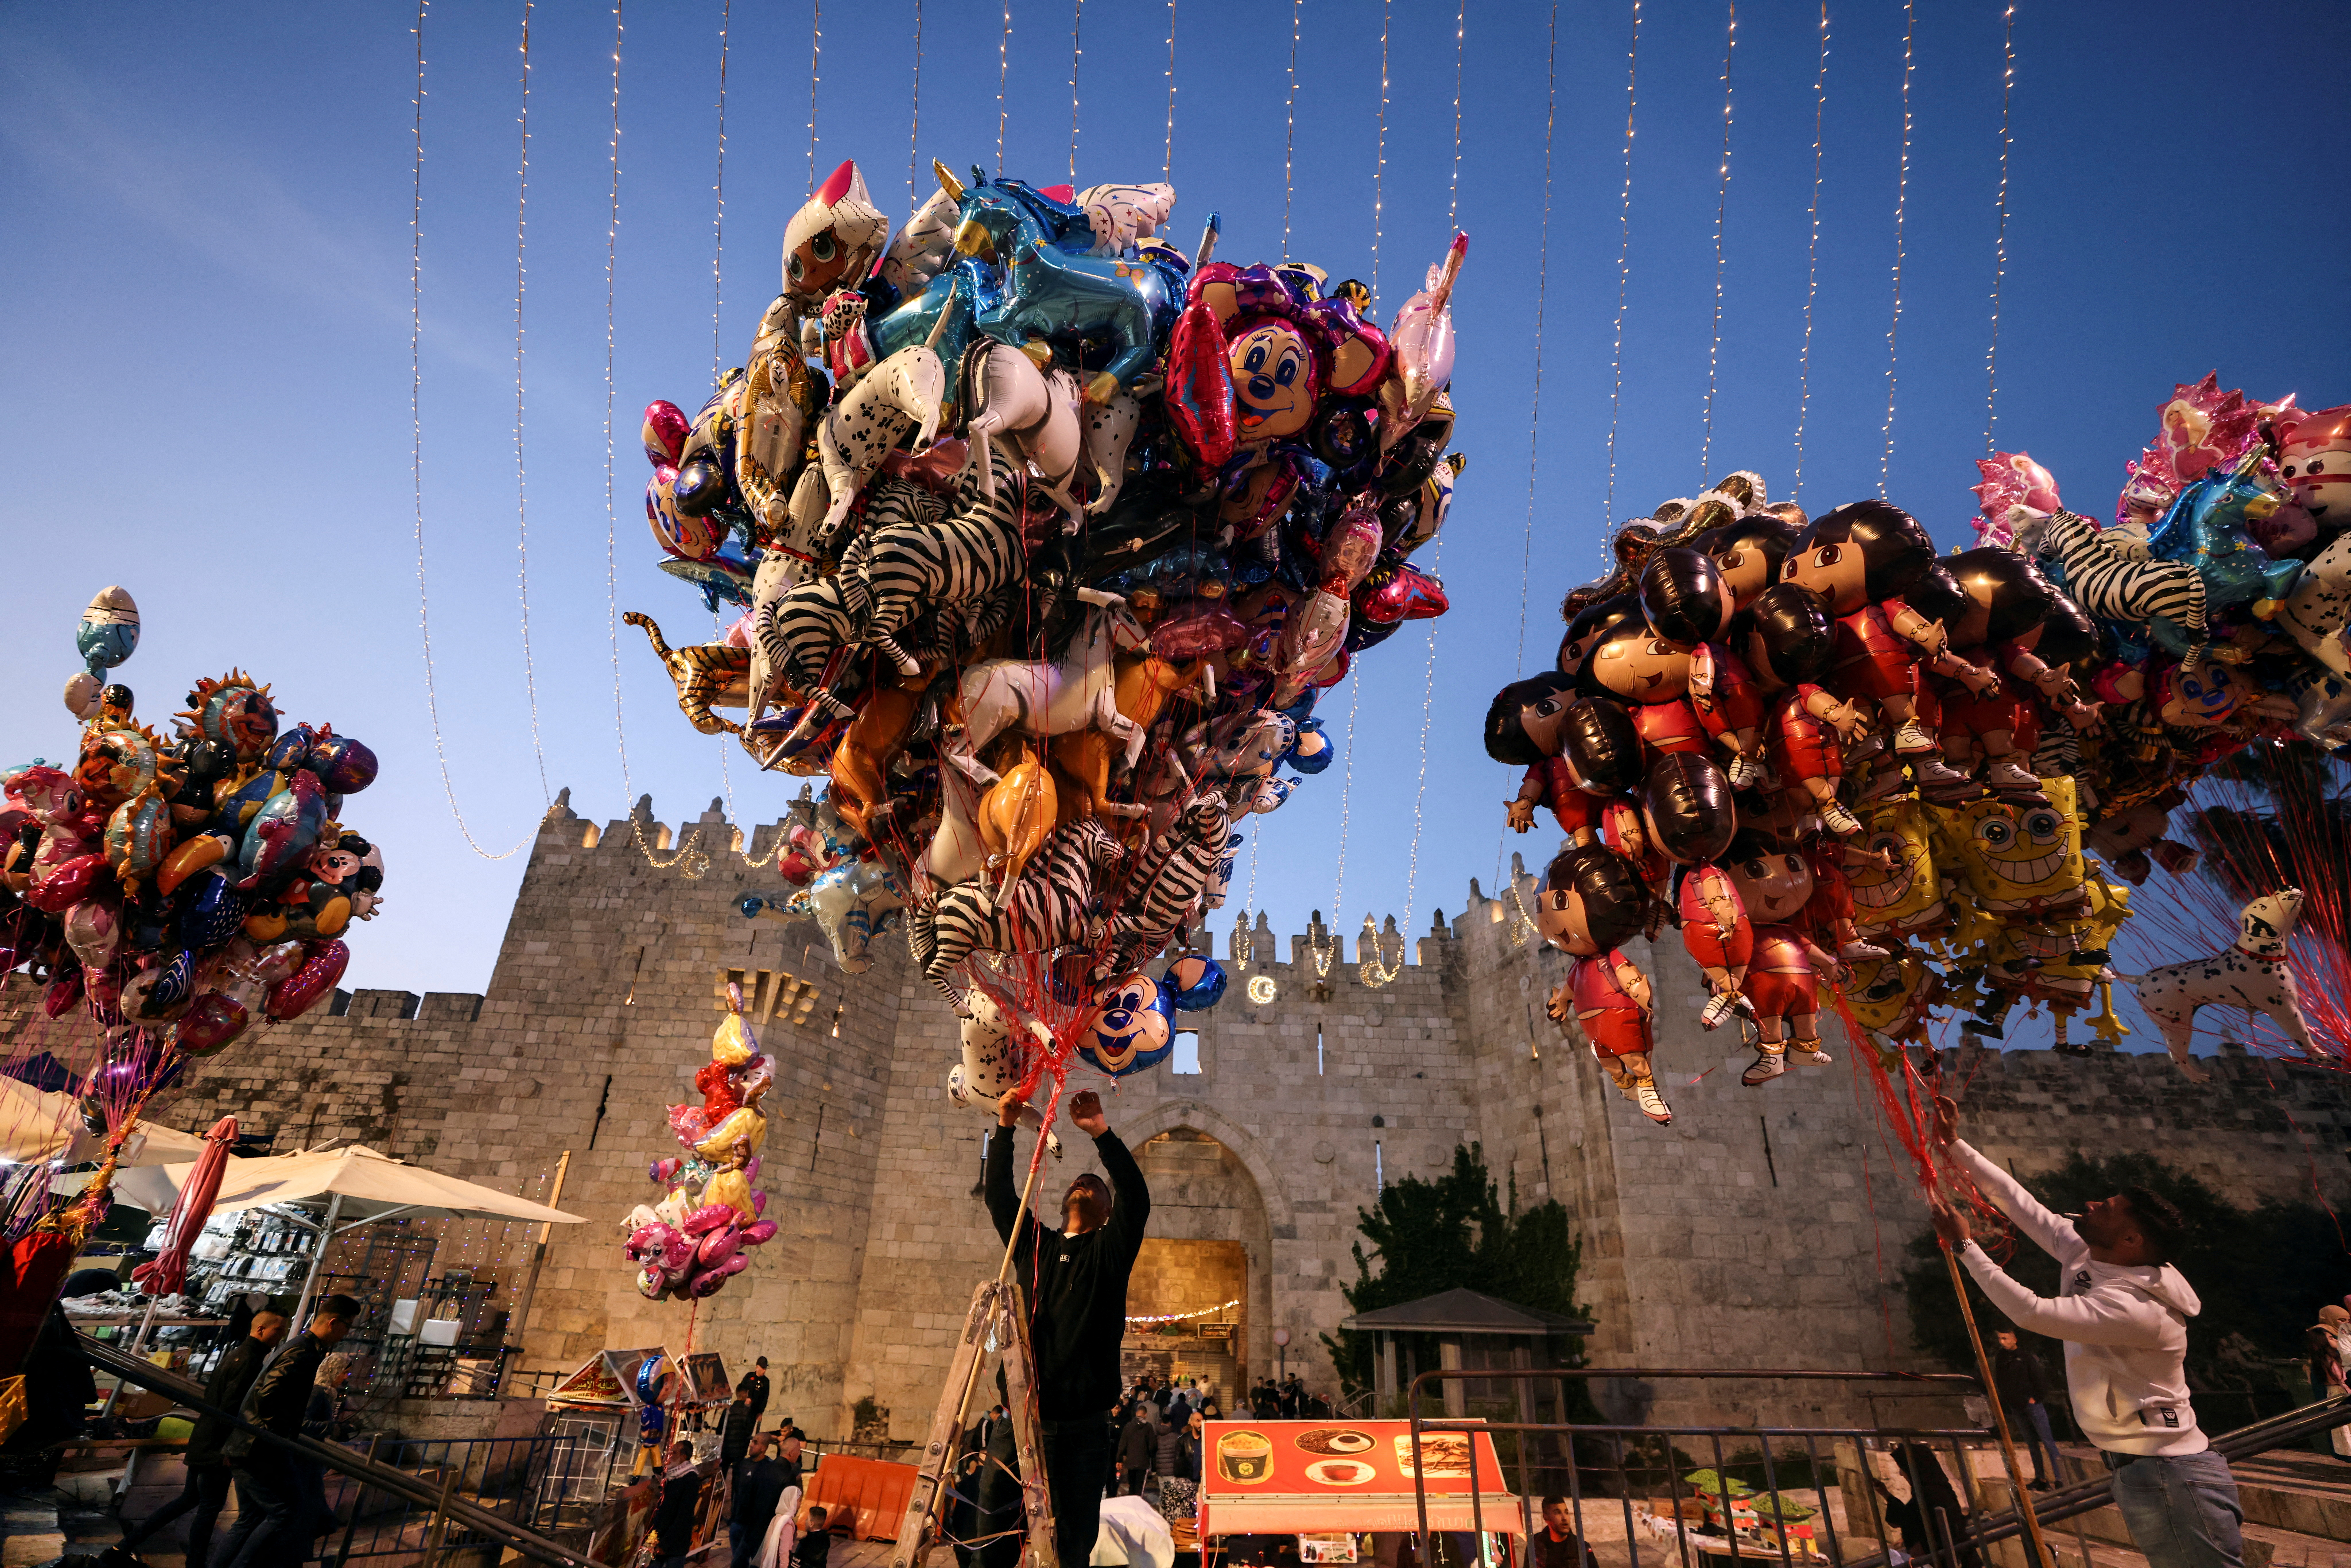 Palestinians celebrate Eid al-Fitr in Jerusalem’s Old City